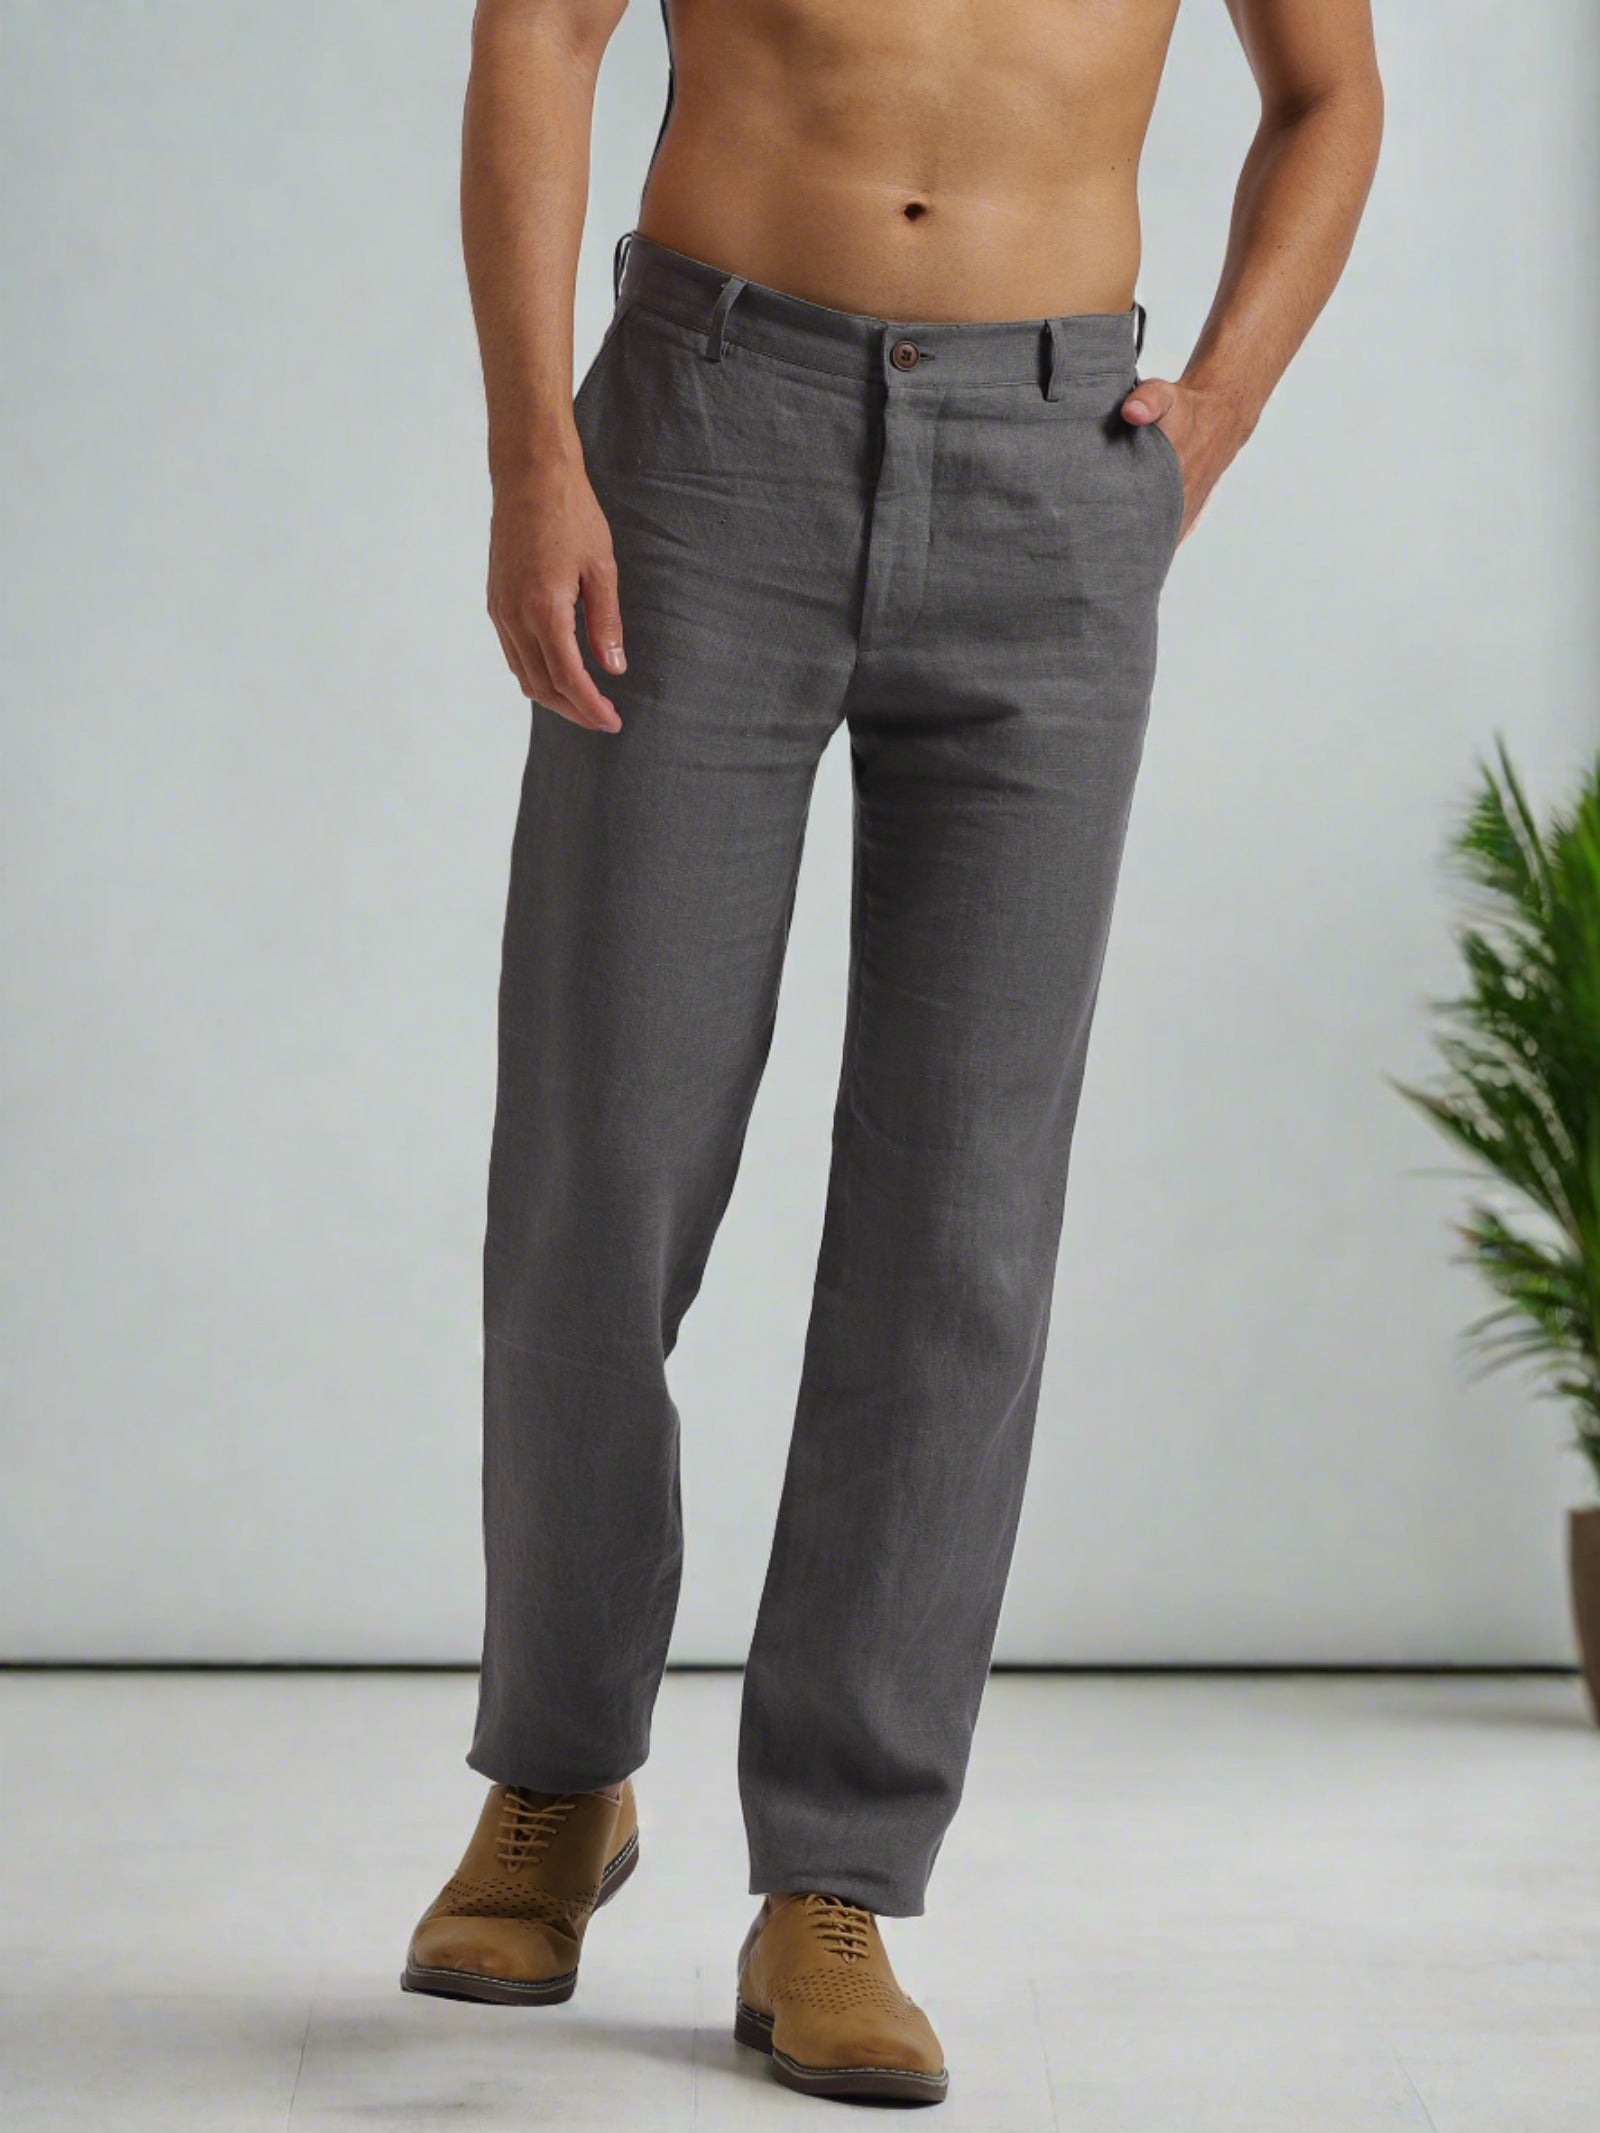 Buy Beige Linen Pants, Capri Linen Pants, Pure Linen Pants, Loose Linen  Pants, Women Linen Capris, Women Linen Trousers, Elastic Waist Pants Online  in India - Etsy